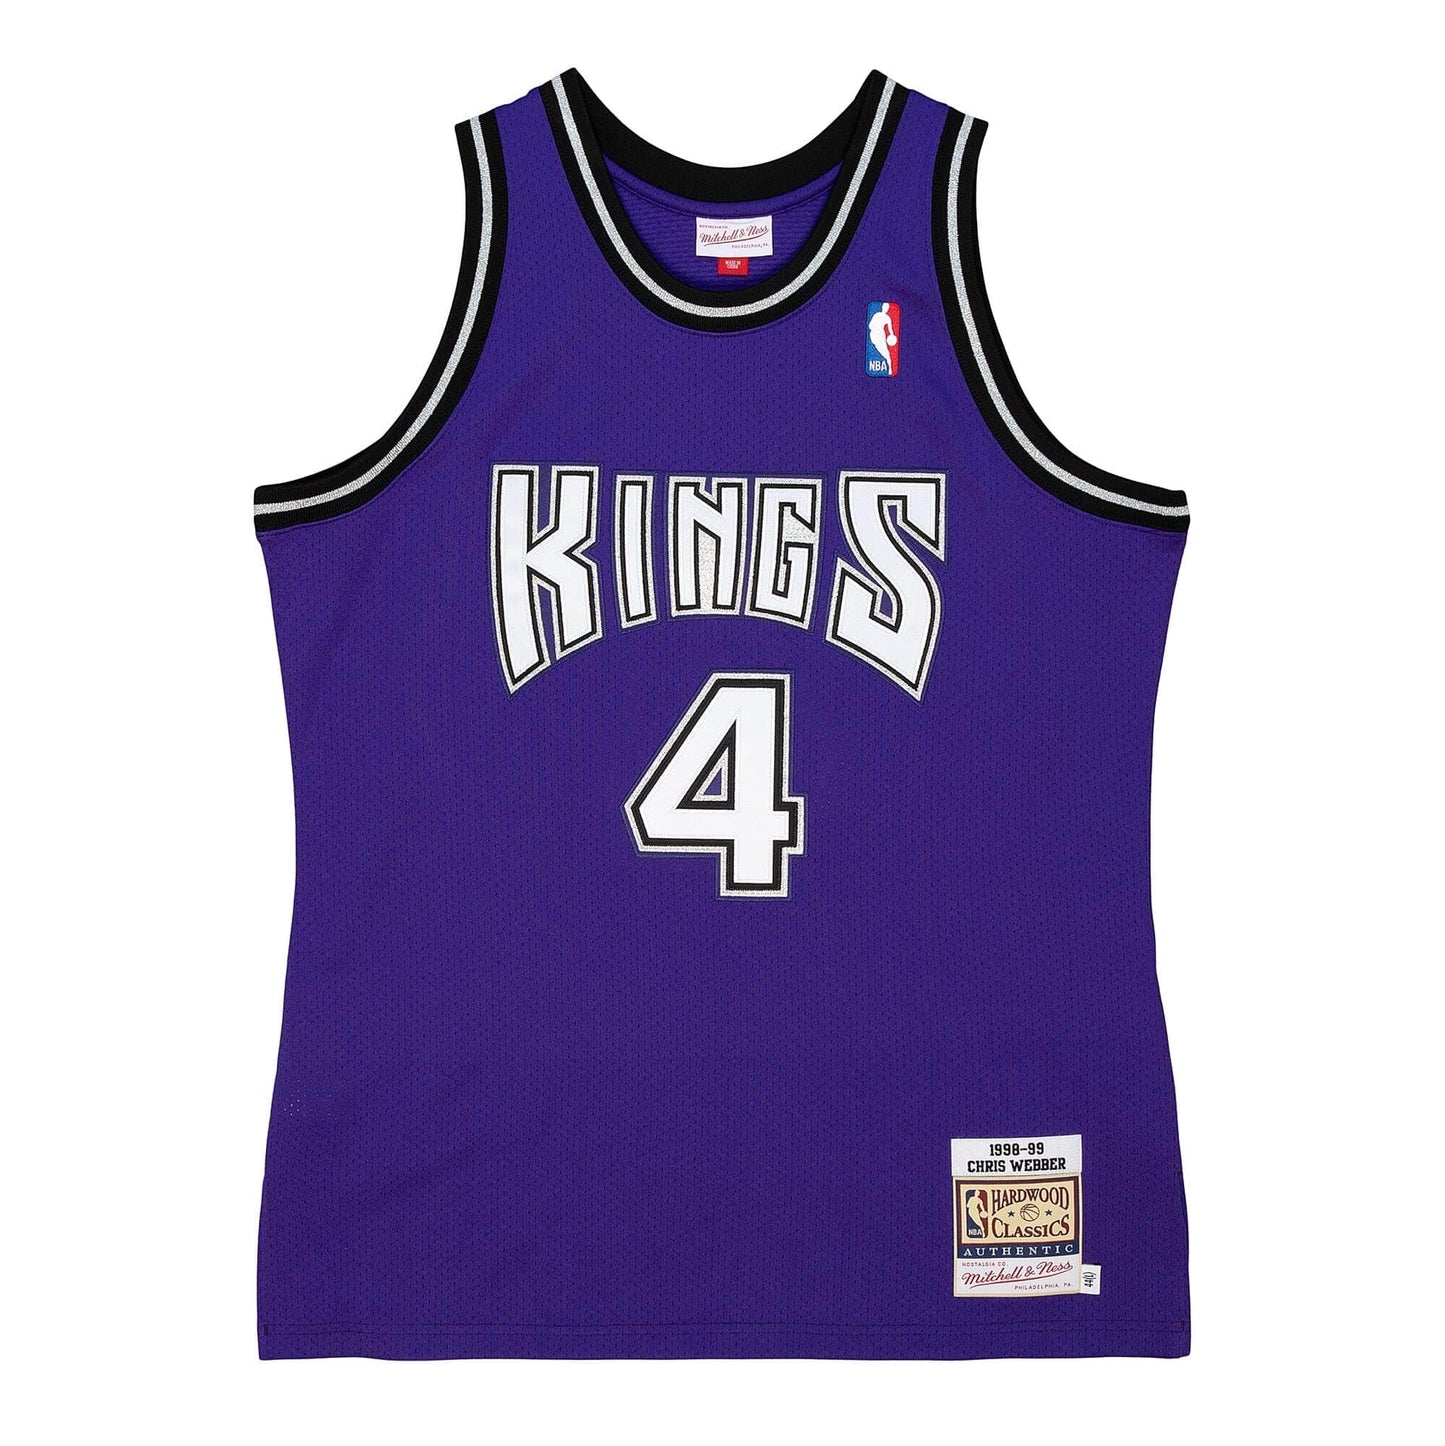 Authentic Chris Webber Sacramento Kings 1998-99 Jersey